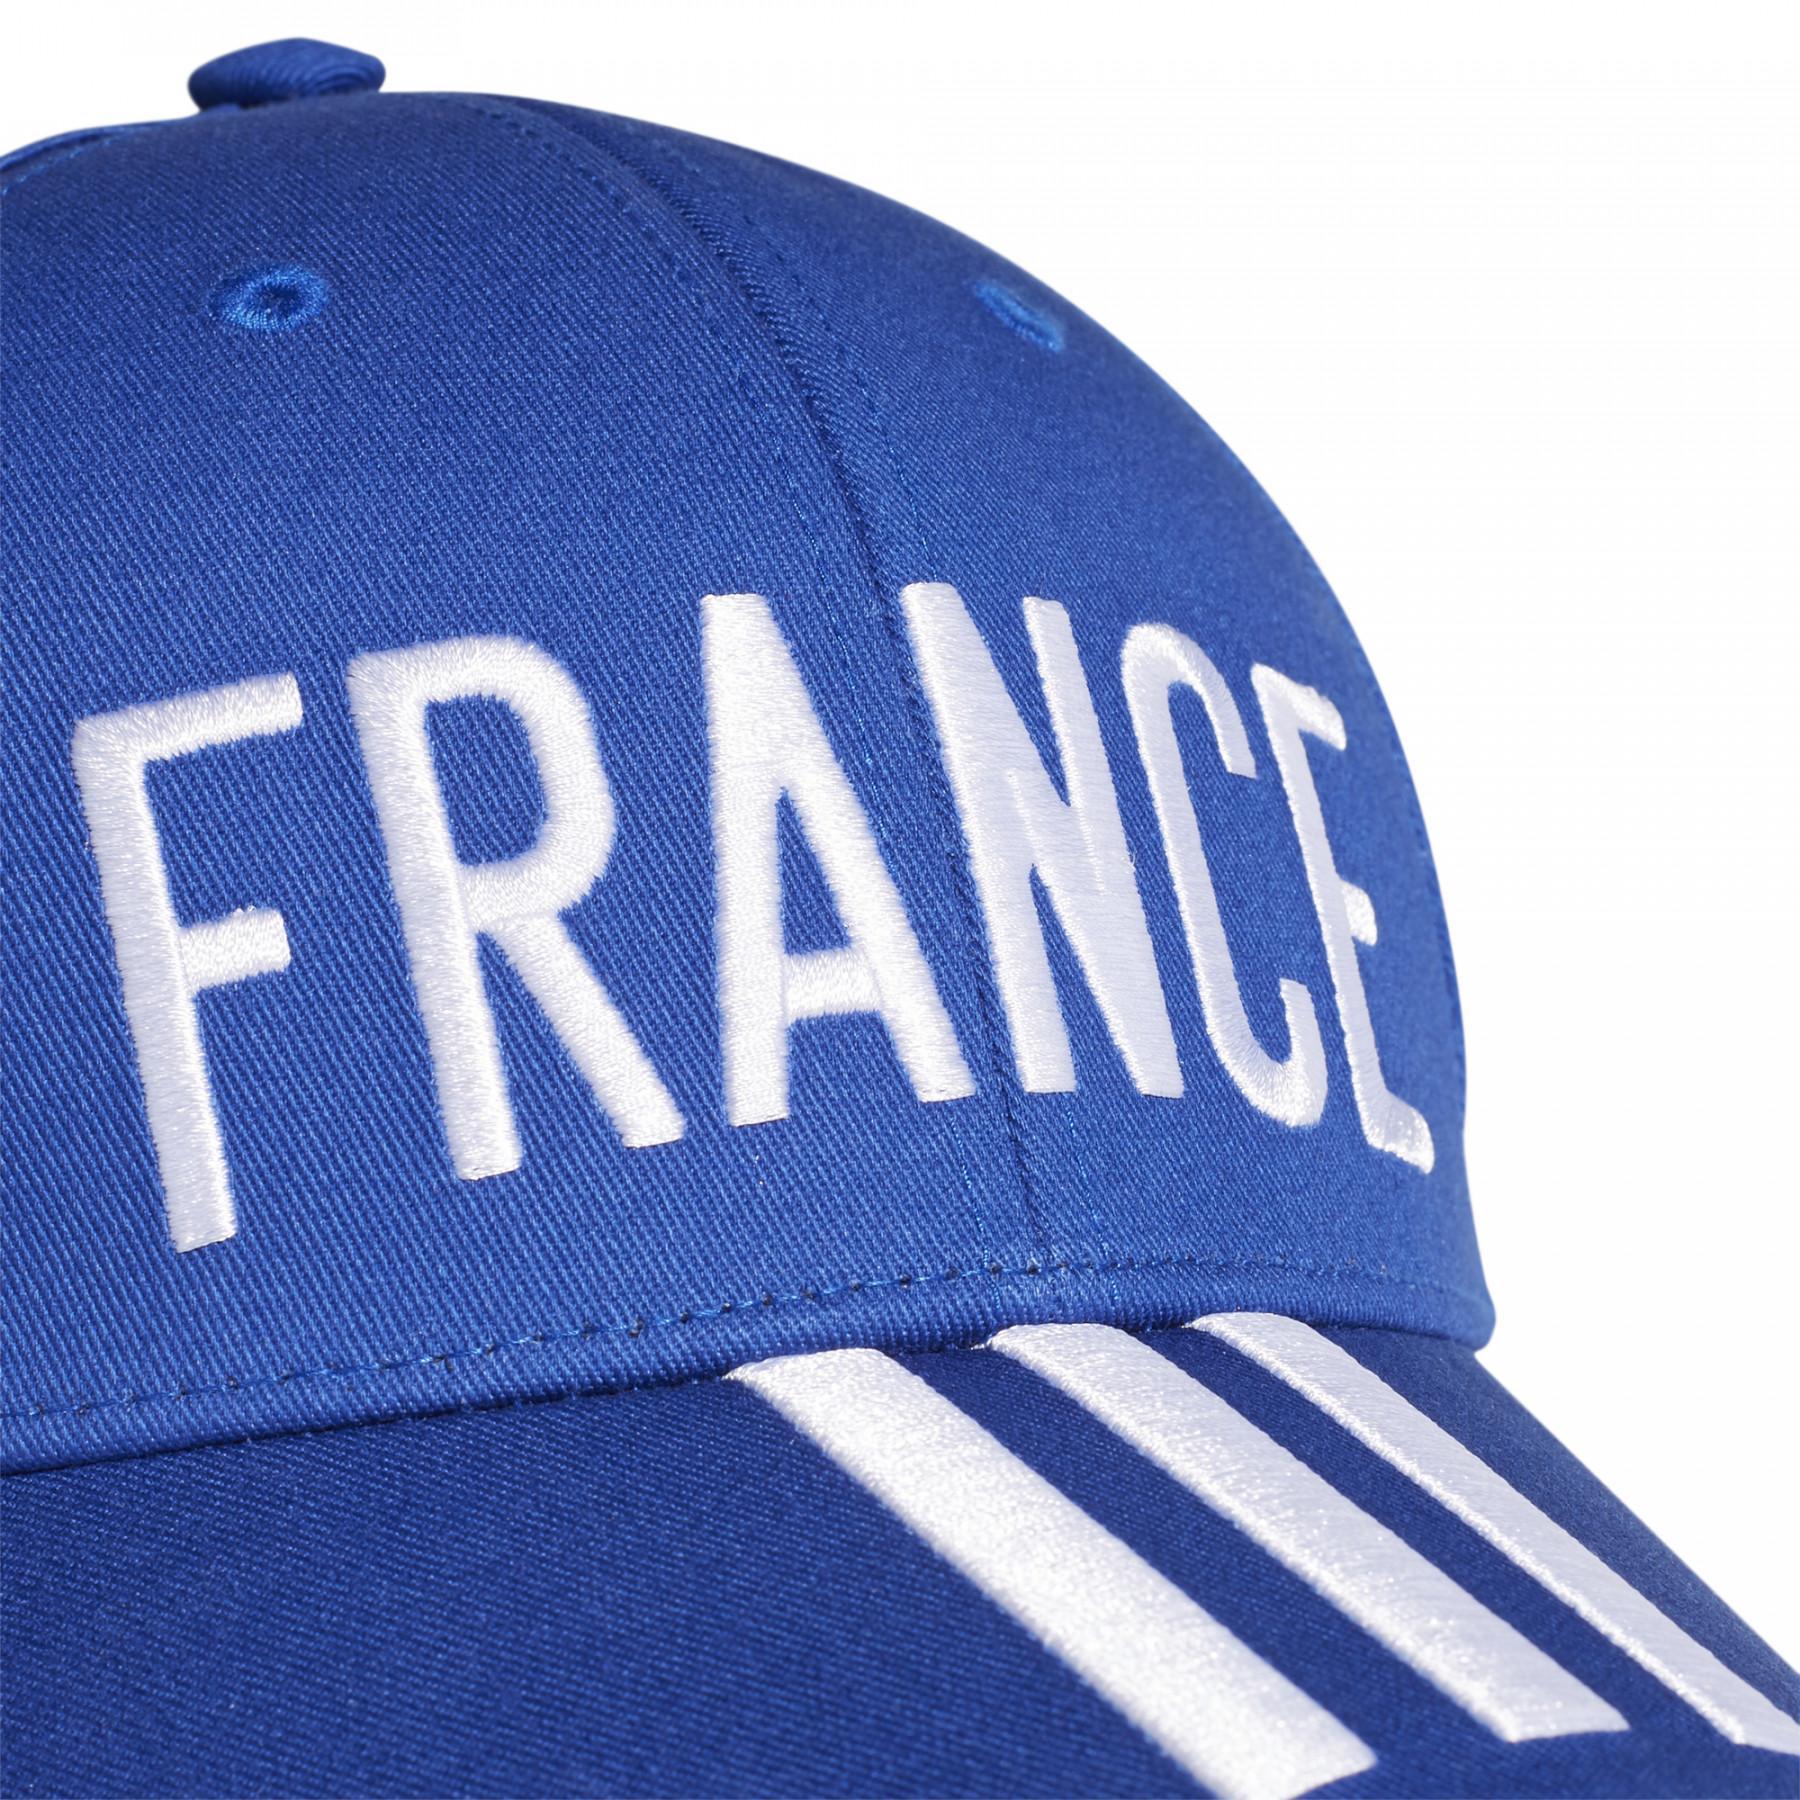 Baseball cap France Fan Euro 2020